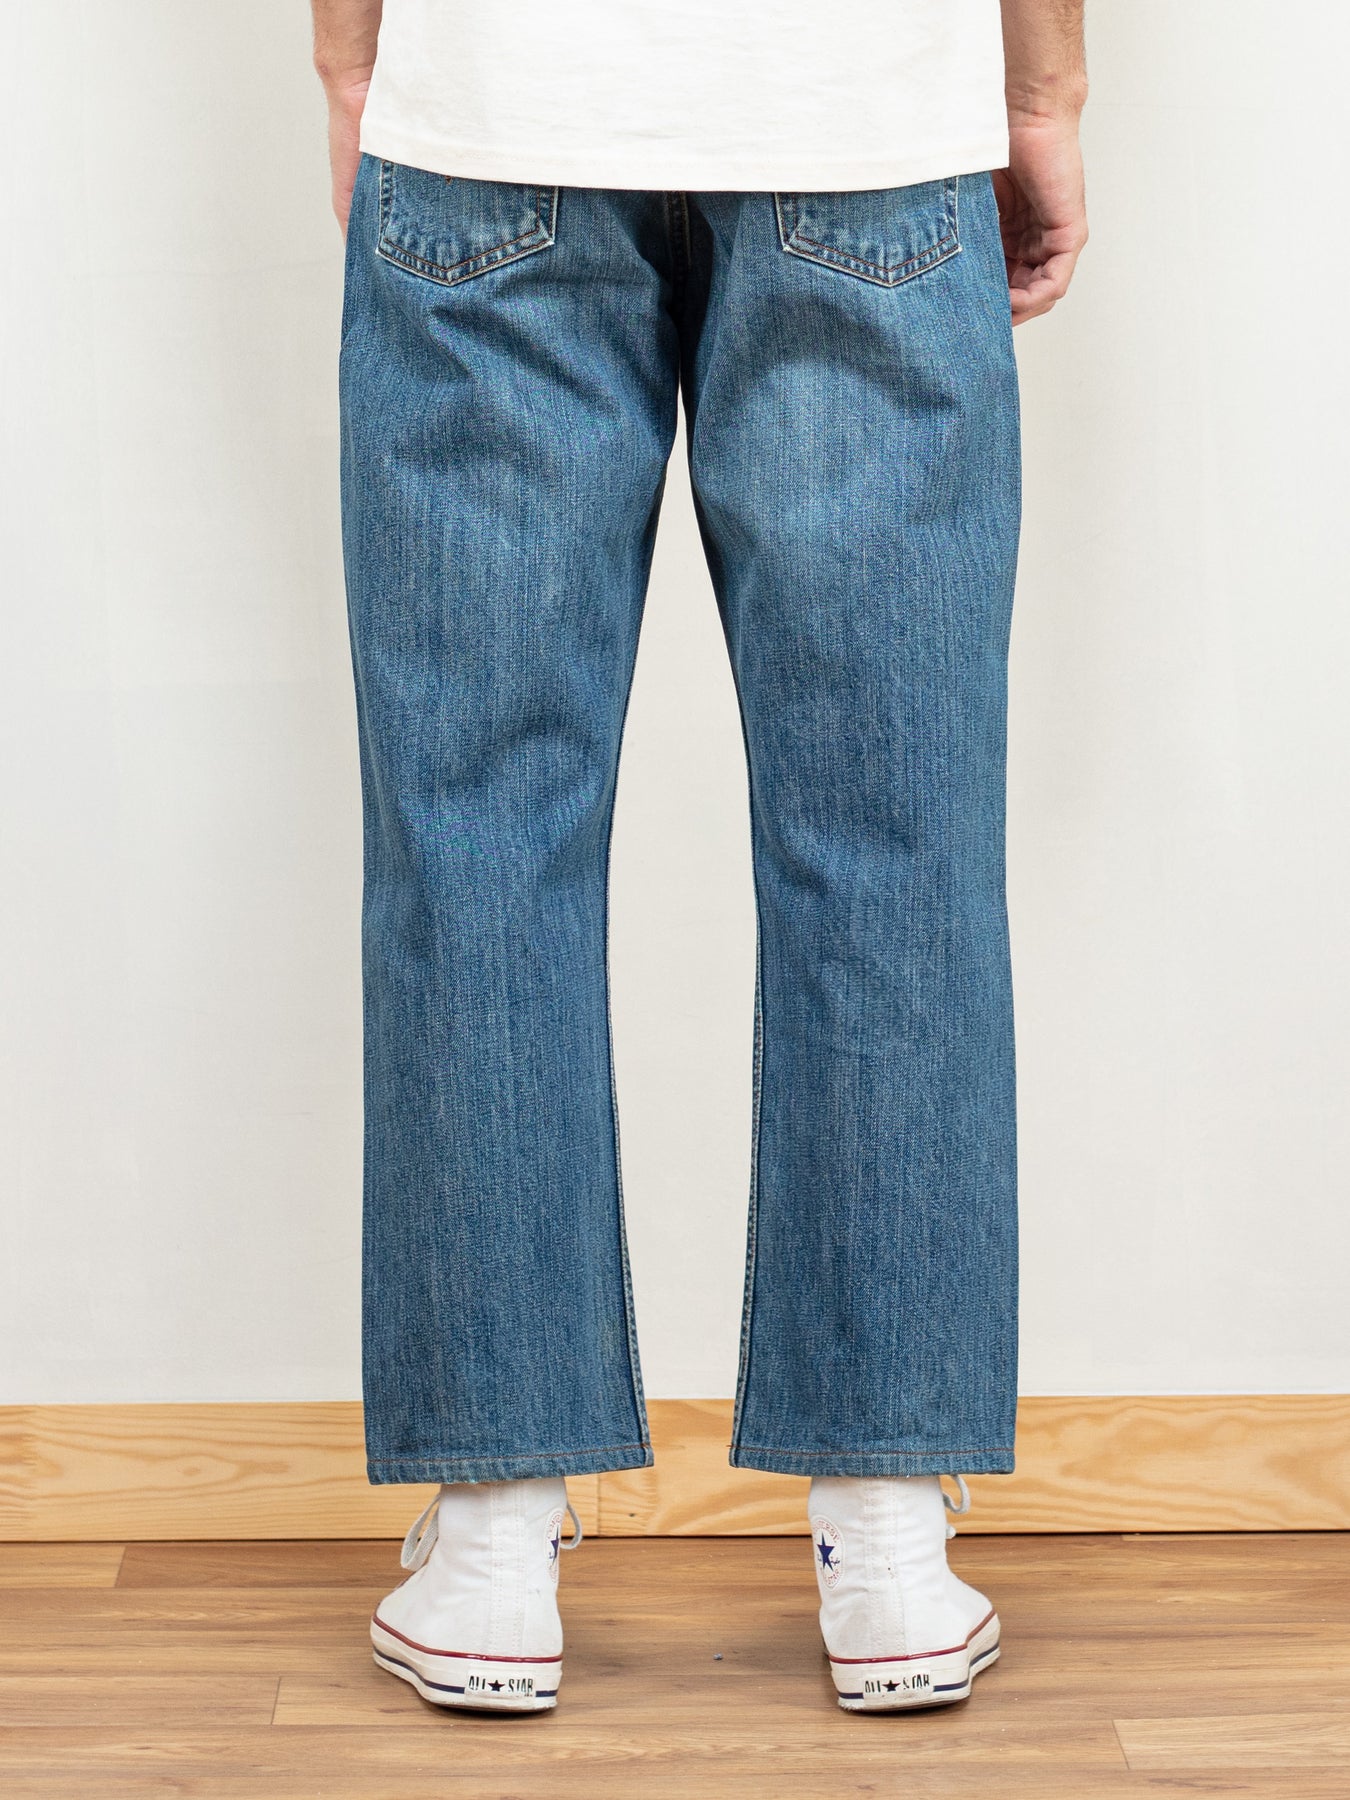 Online Vintage Store | 90's Men LEVIS 512 Jeans | Northern Grip